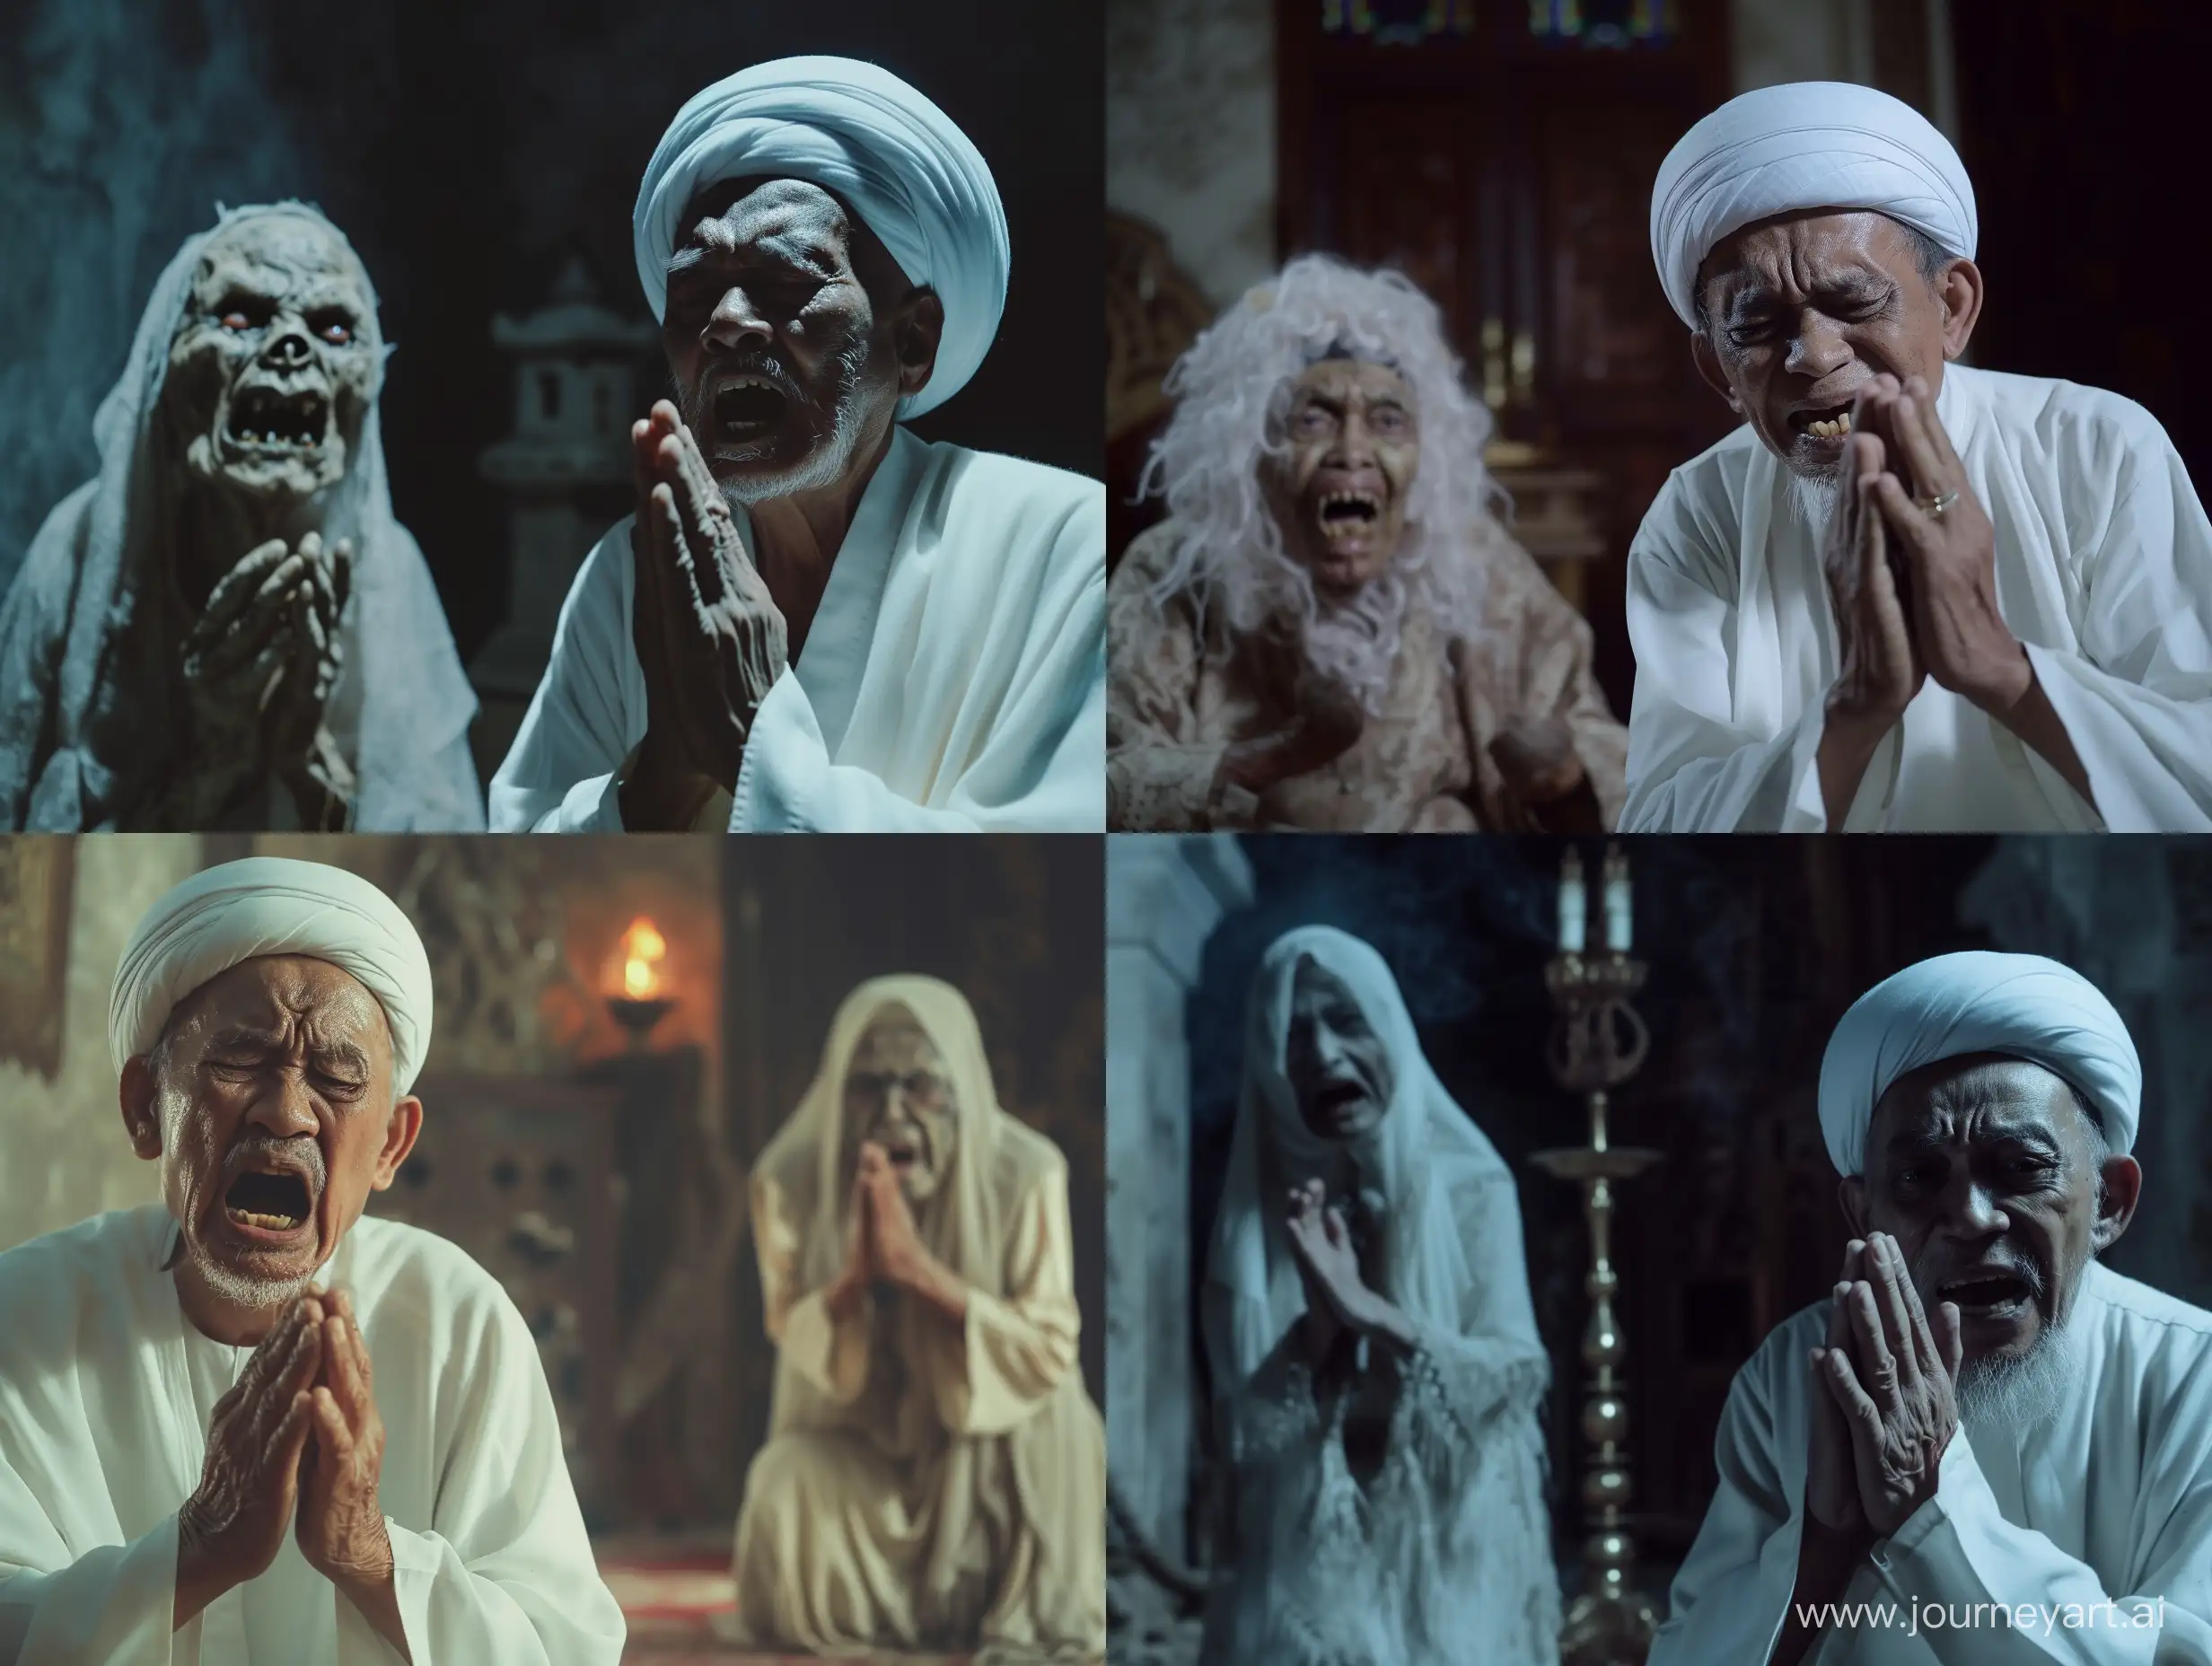 Eerie-Encounter-Indonesian-Muslim-Man-Praying-Amidst-Ghostly-Presence